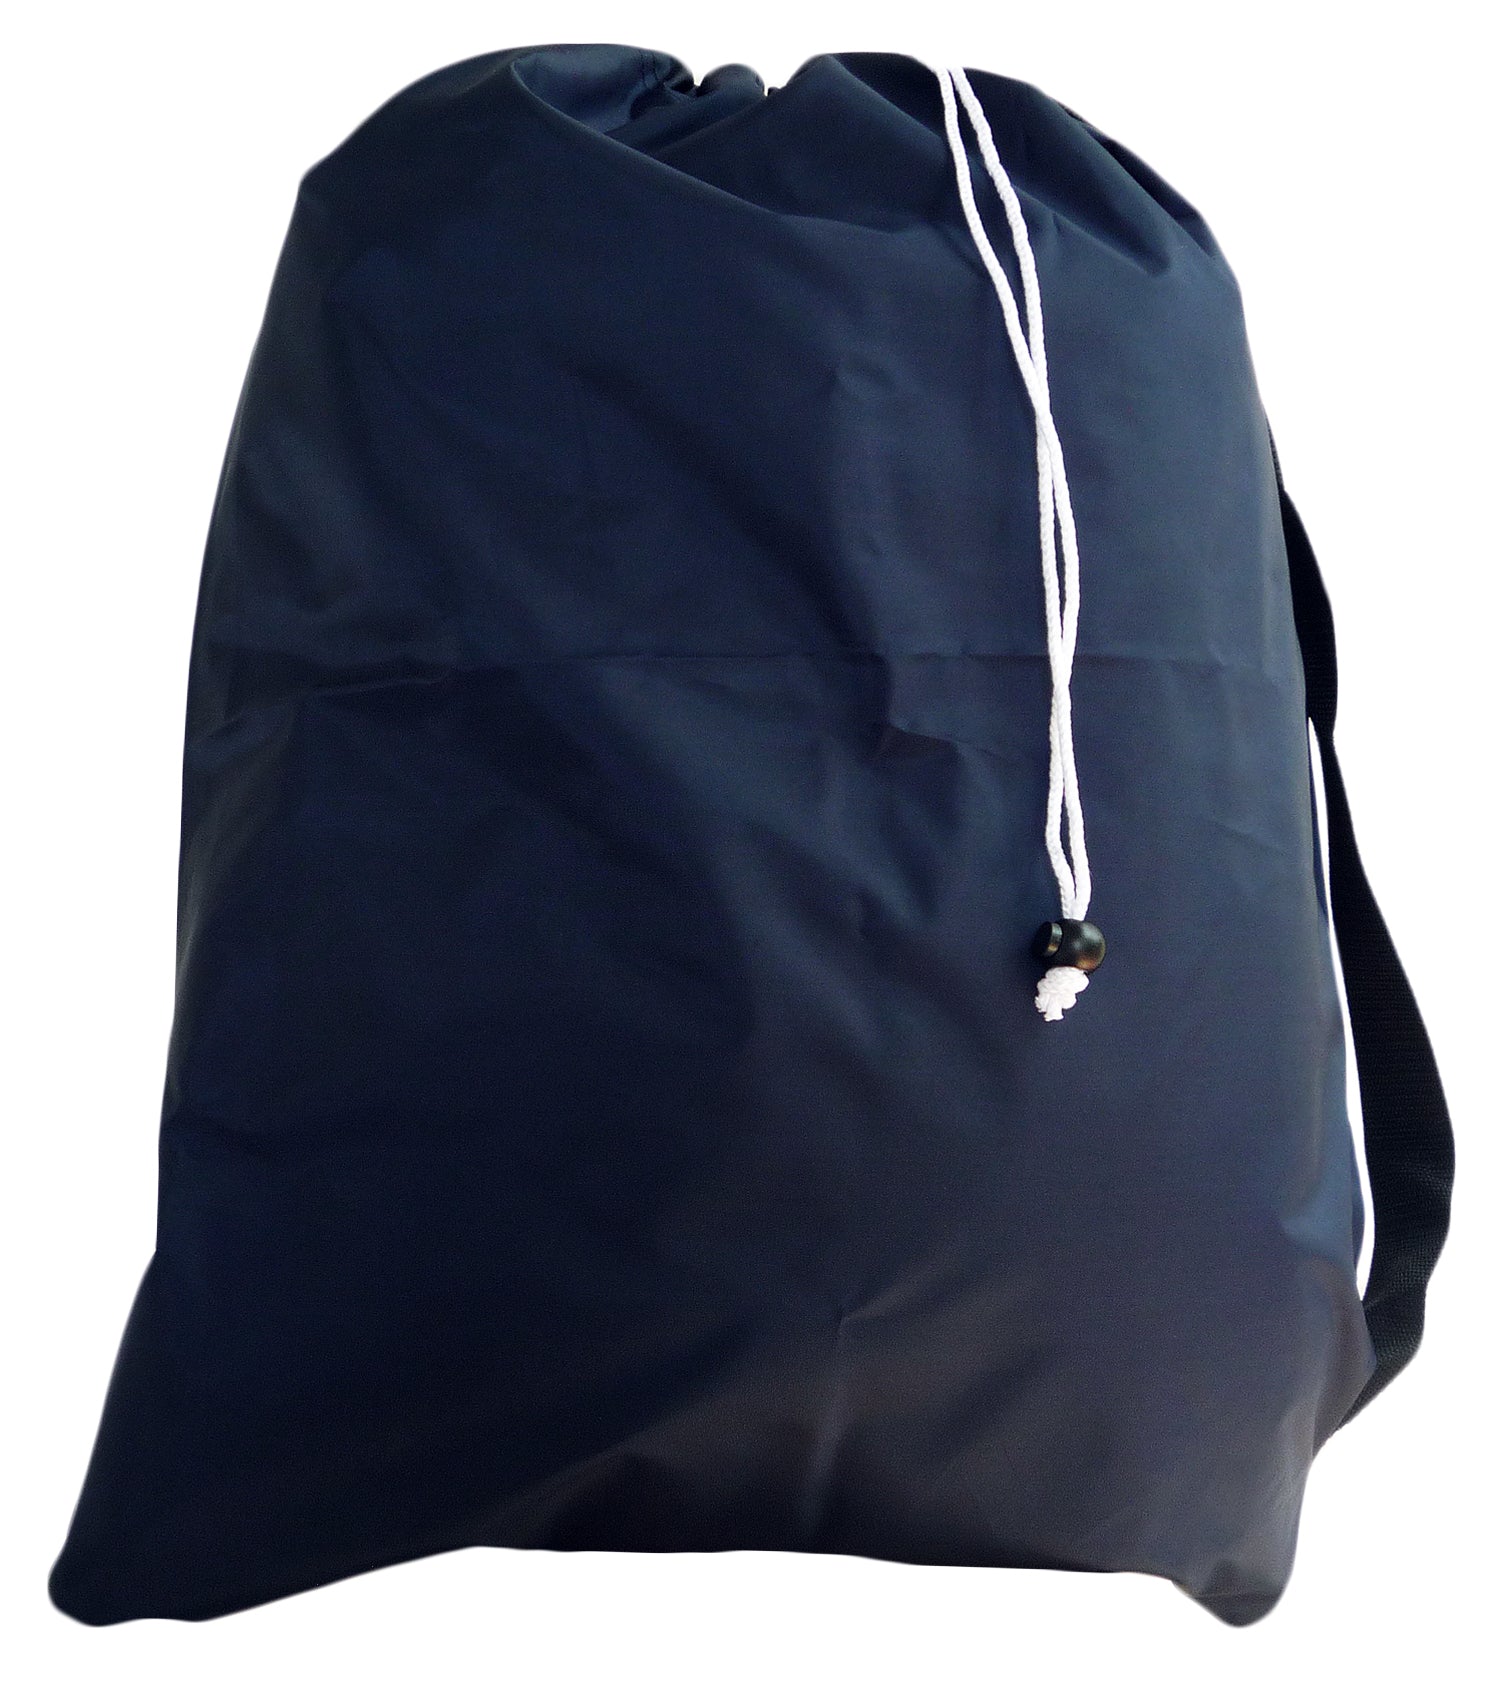 Medium Laundry Bag with Strap, Navy Blue